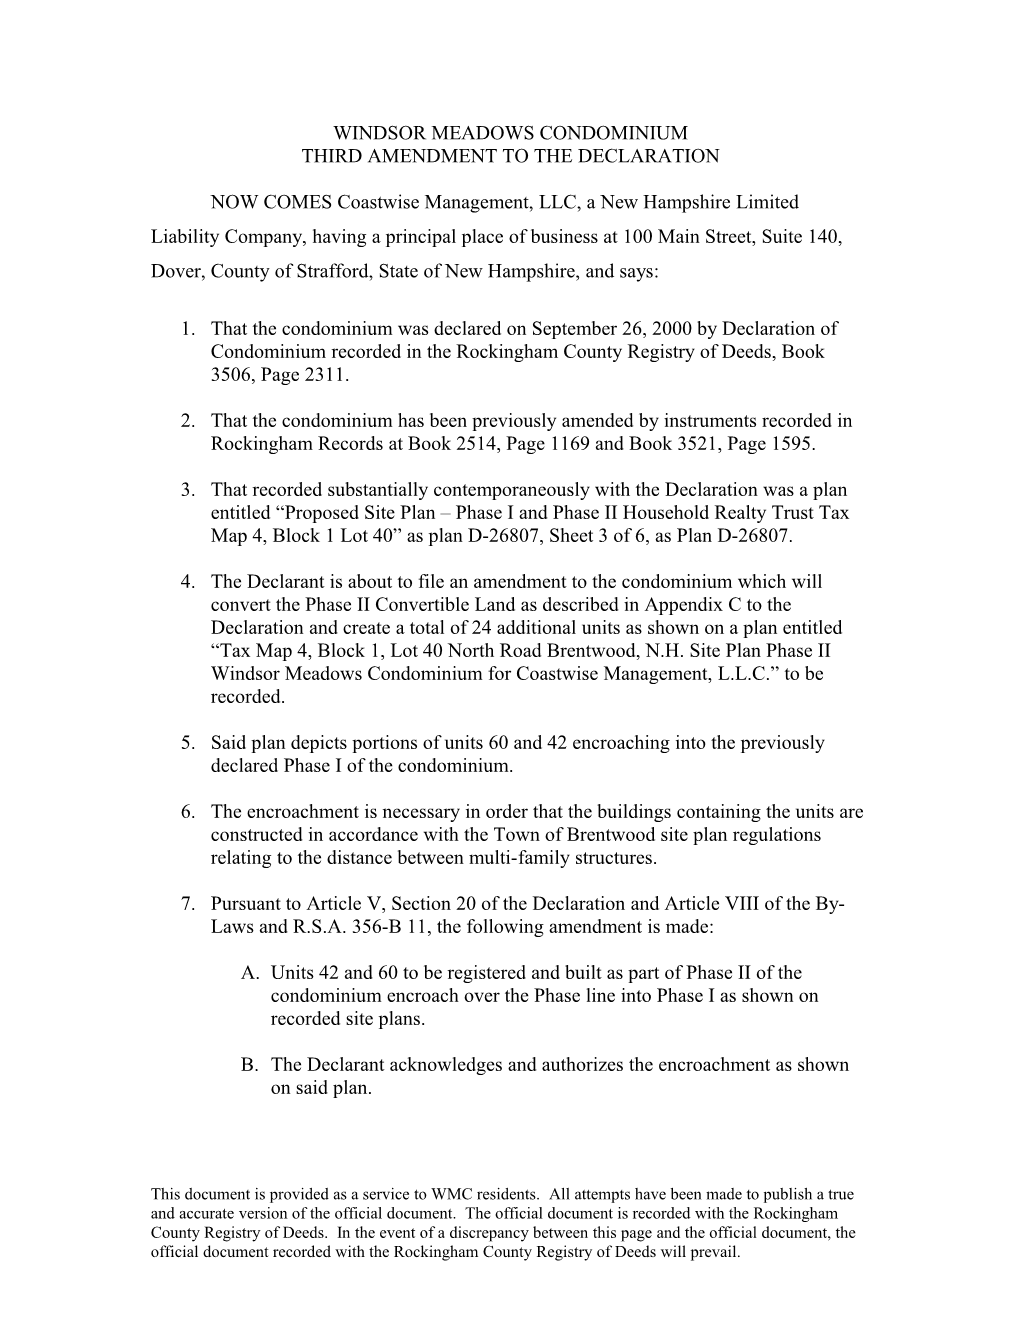 Third Amendment to the Declaration - Word Format